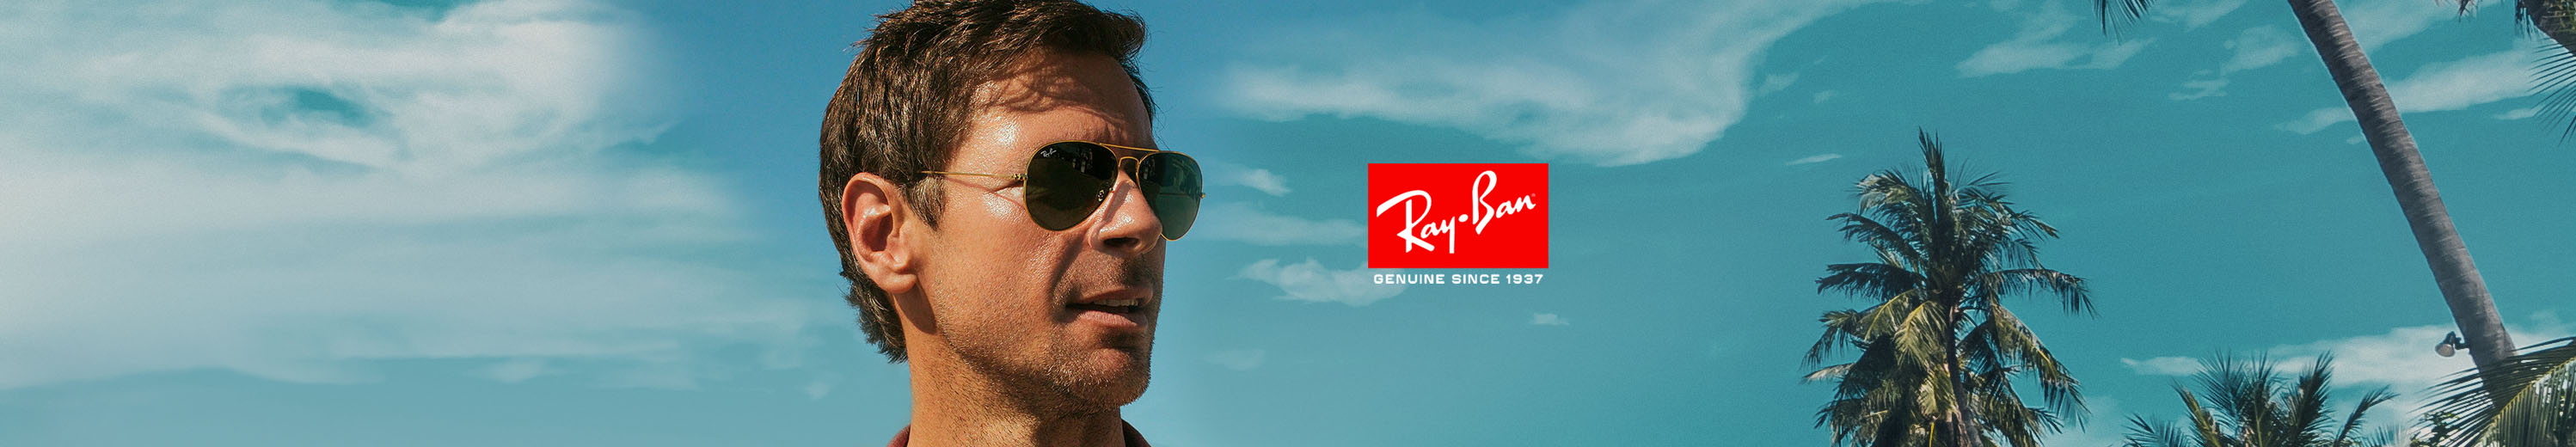 Ray-Ban Sunglasses for Men